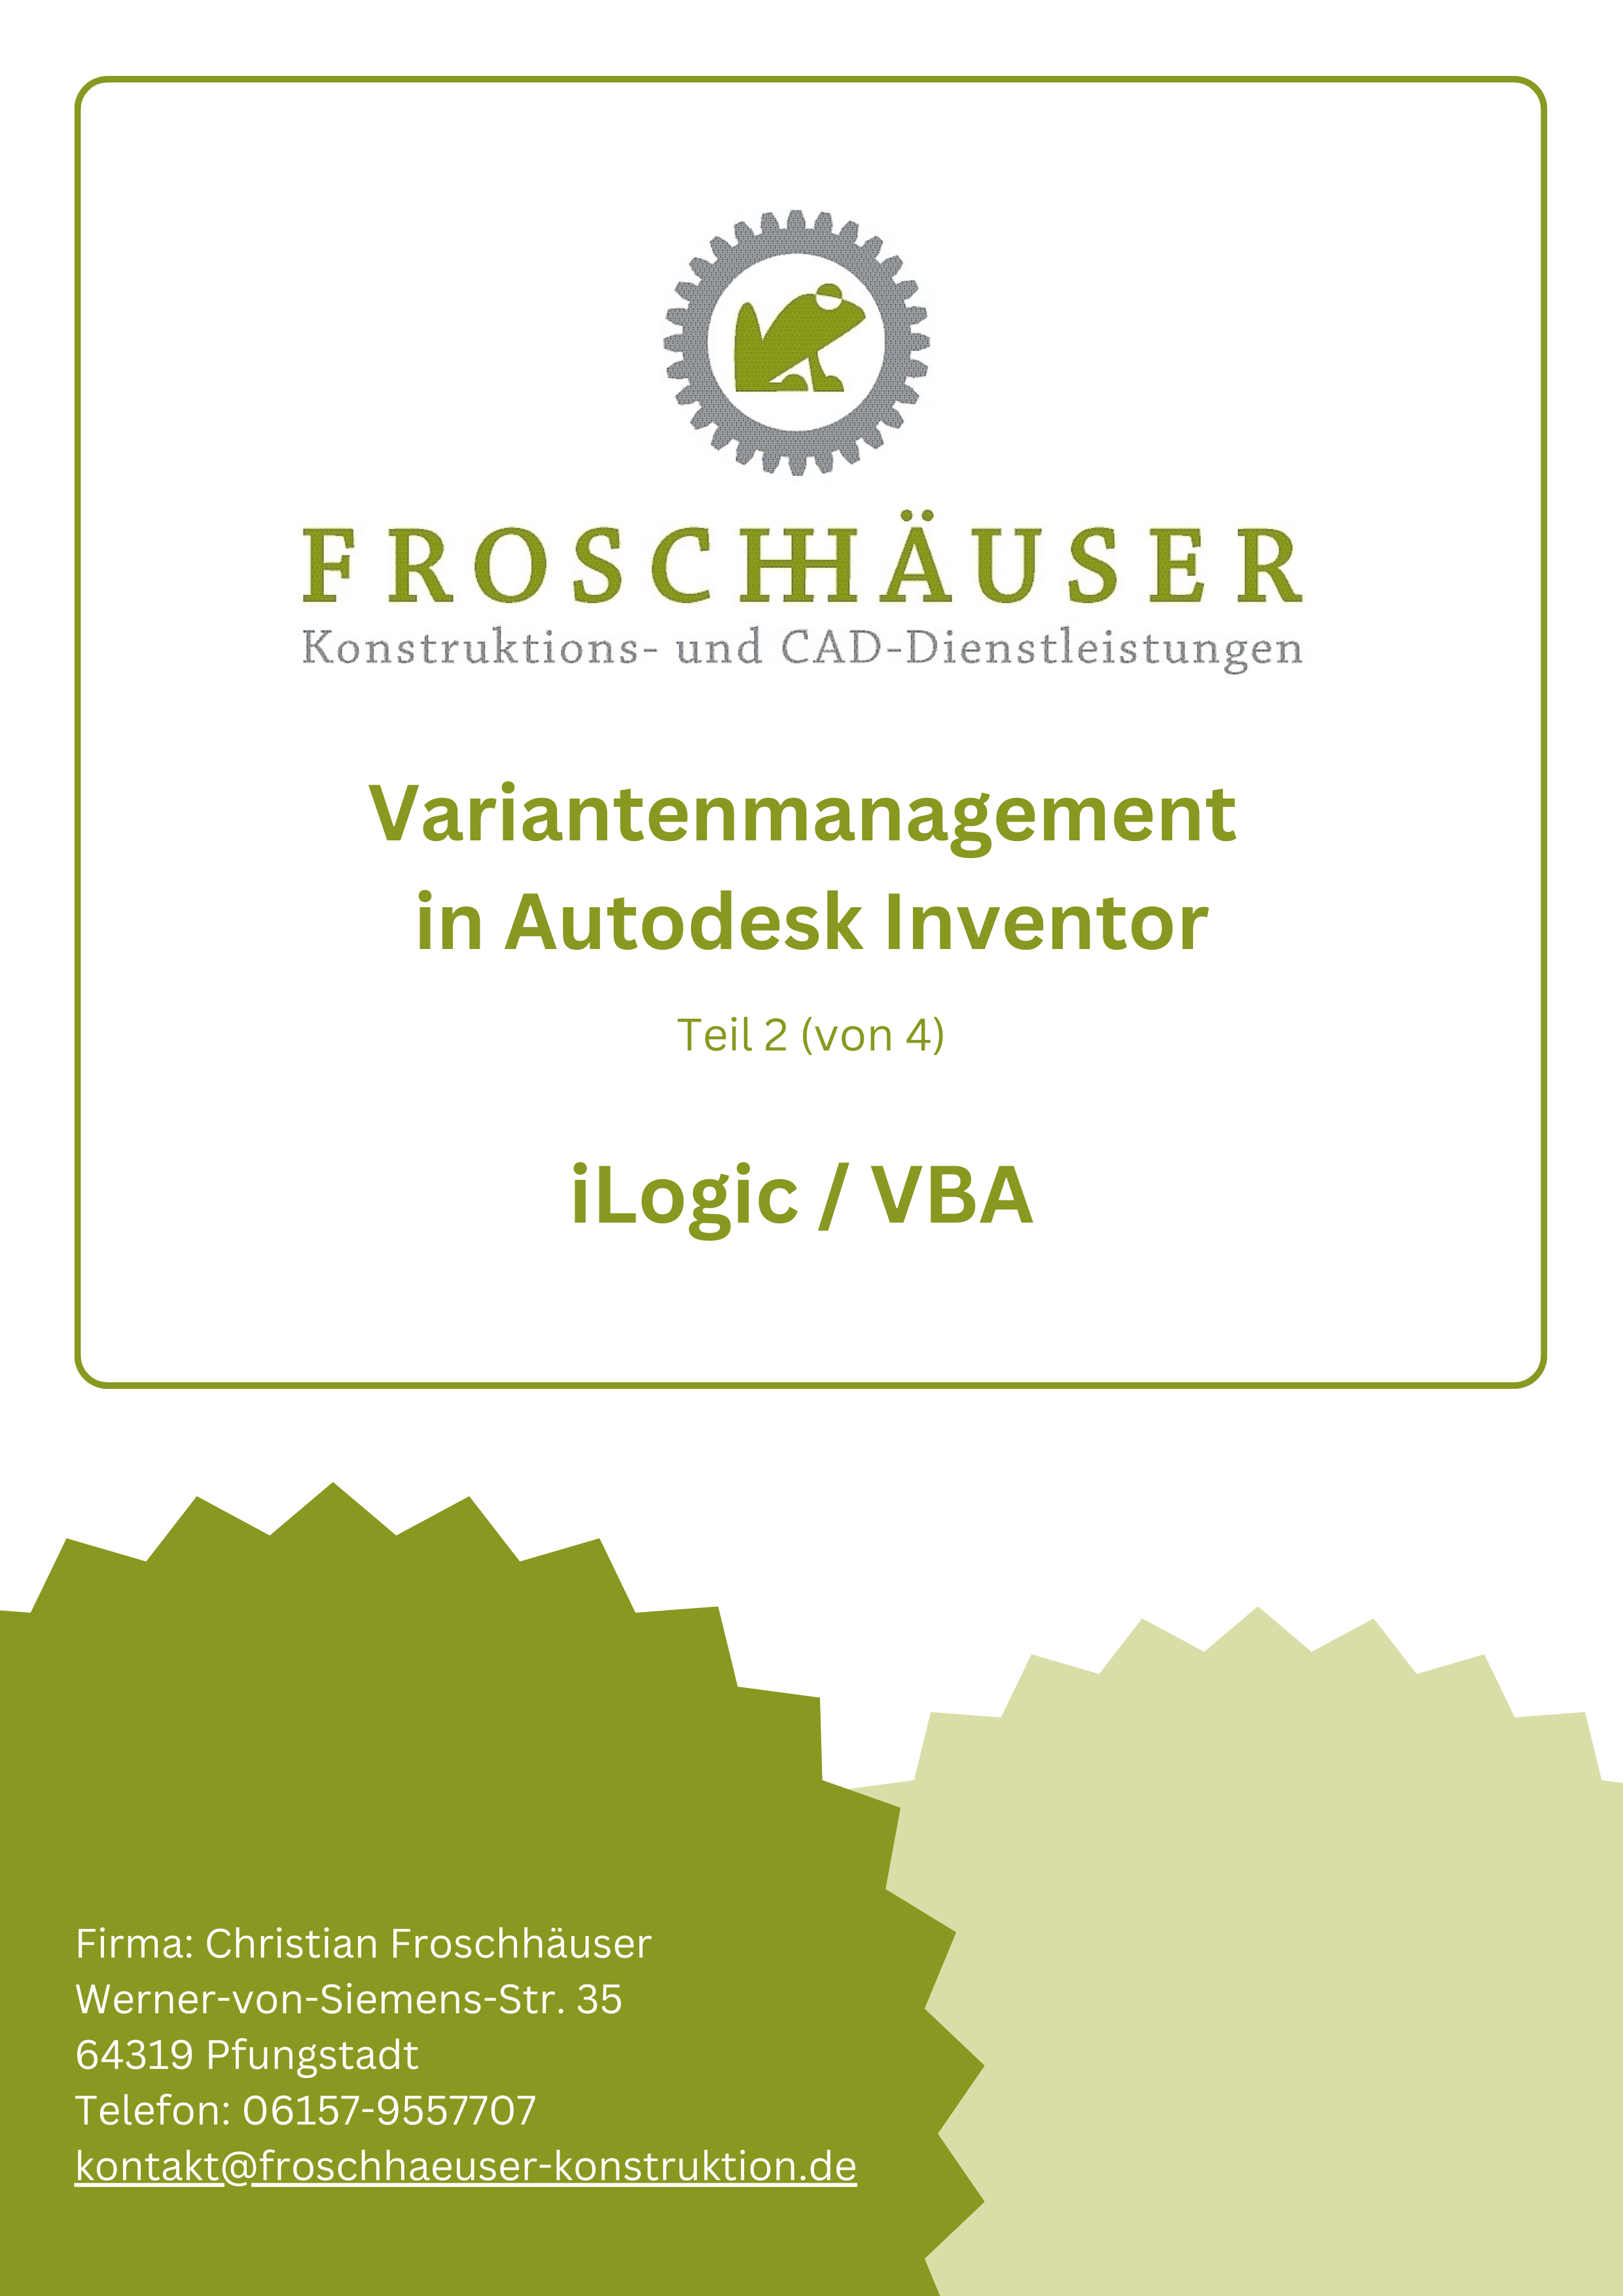 Variantenmanagement in Autodesk Inventor Teil 2: iLogic / VBA